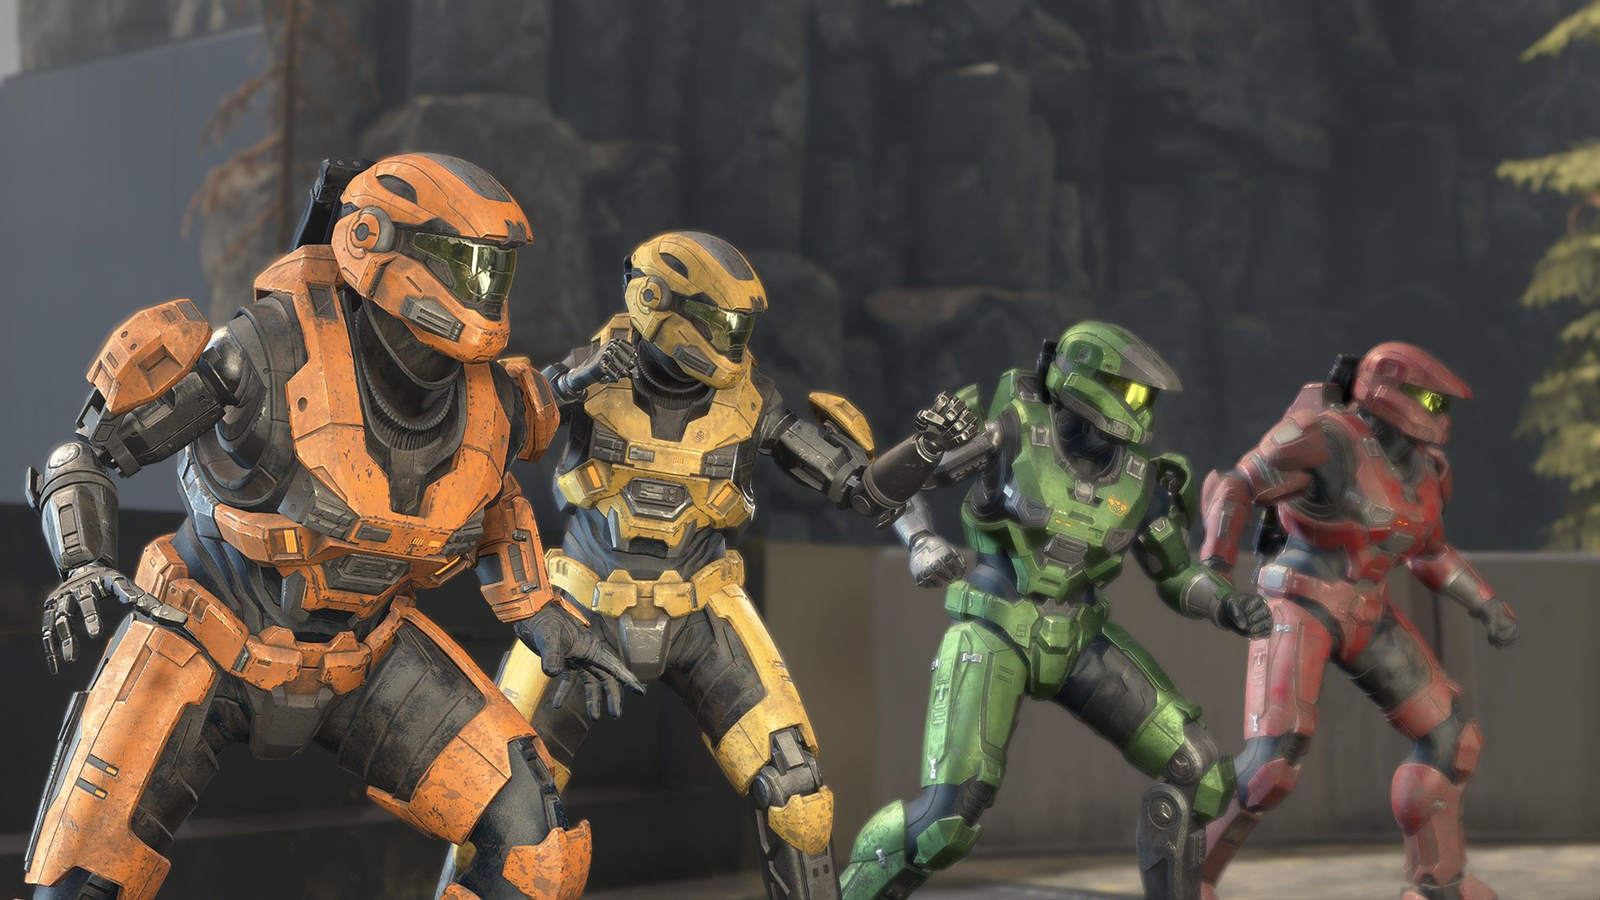 Halo Infinite: multiplayer terá beta aberto neste fim de semana